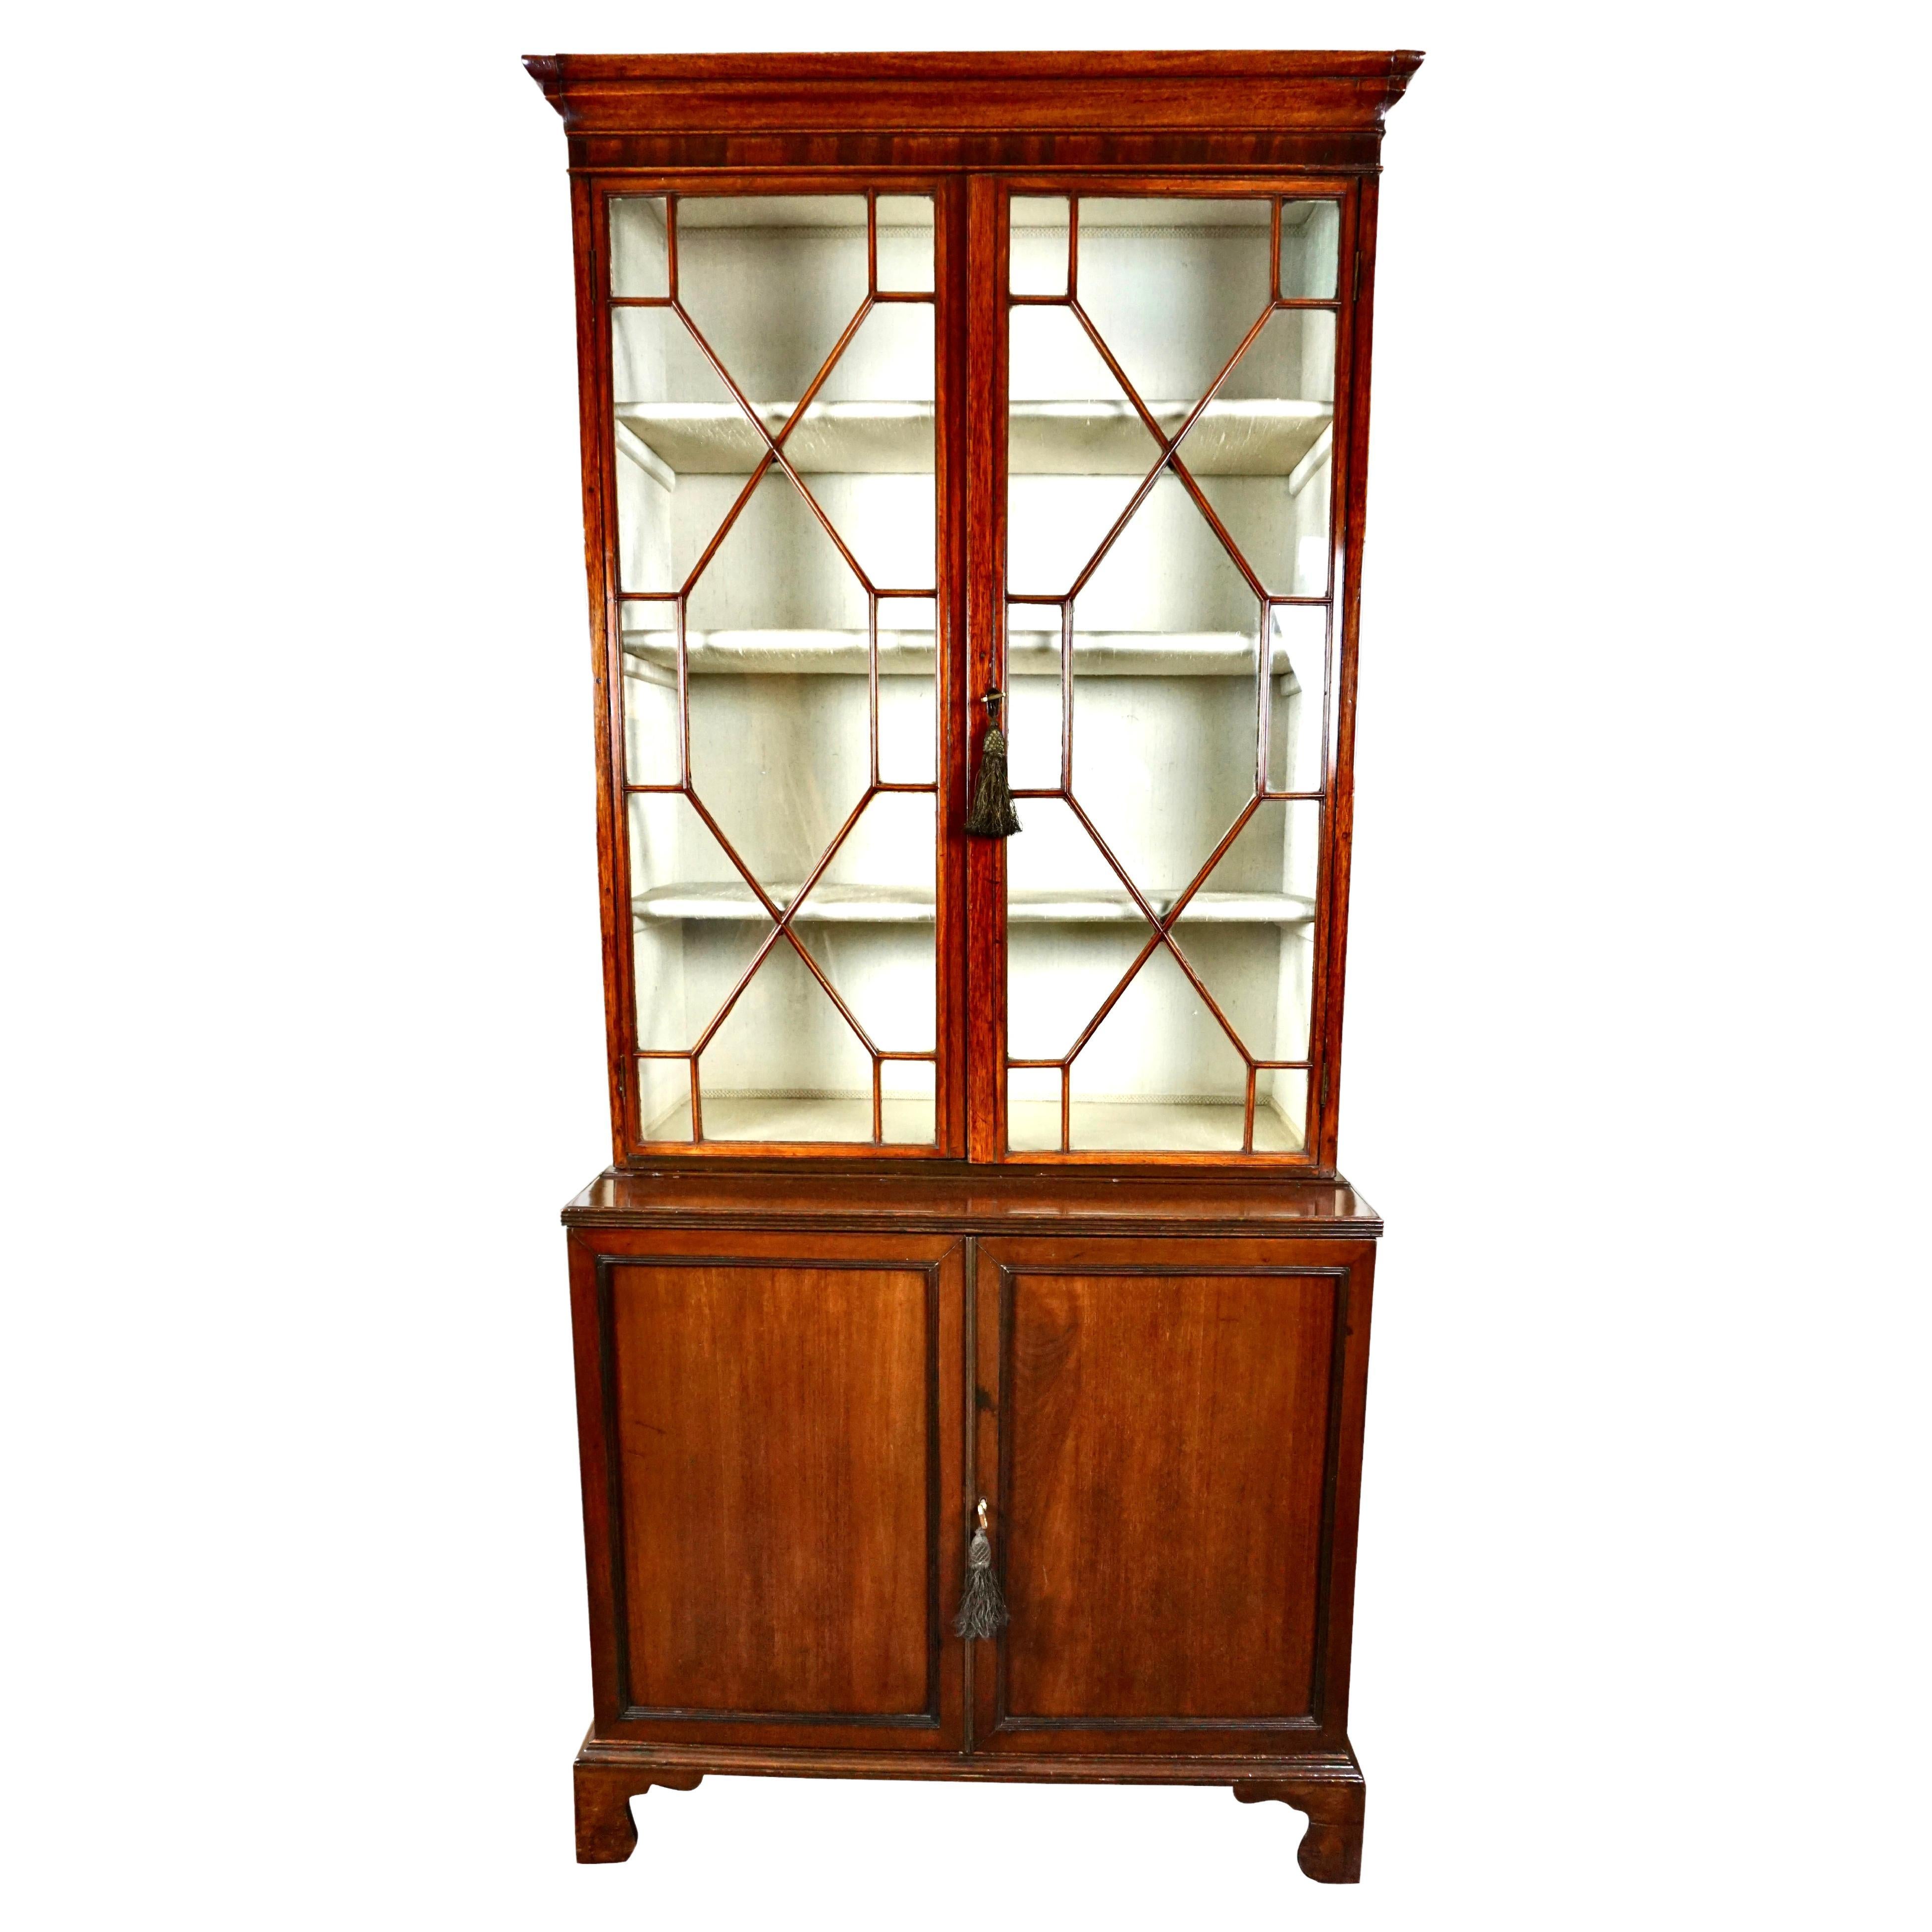 English Georgian Period Mahogany Bookcase Cabinet with Astragal Glazed Doors